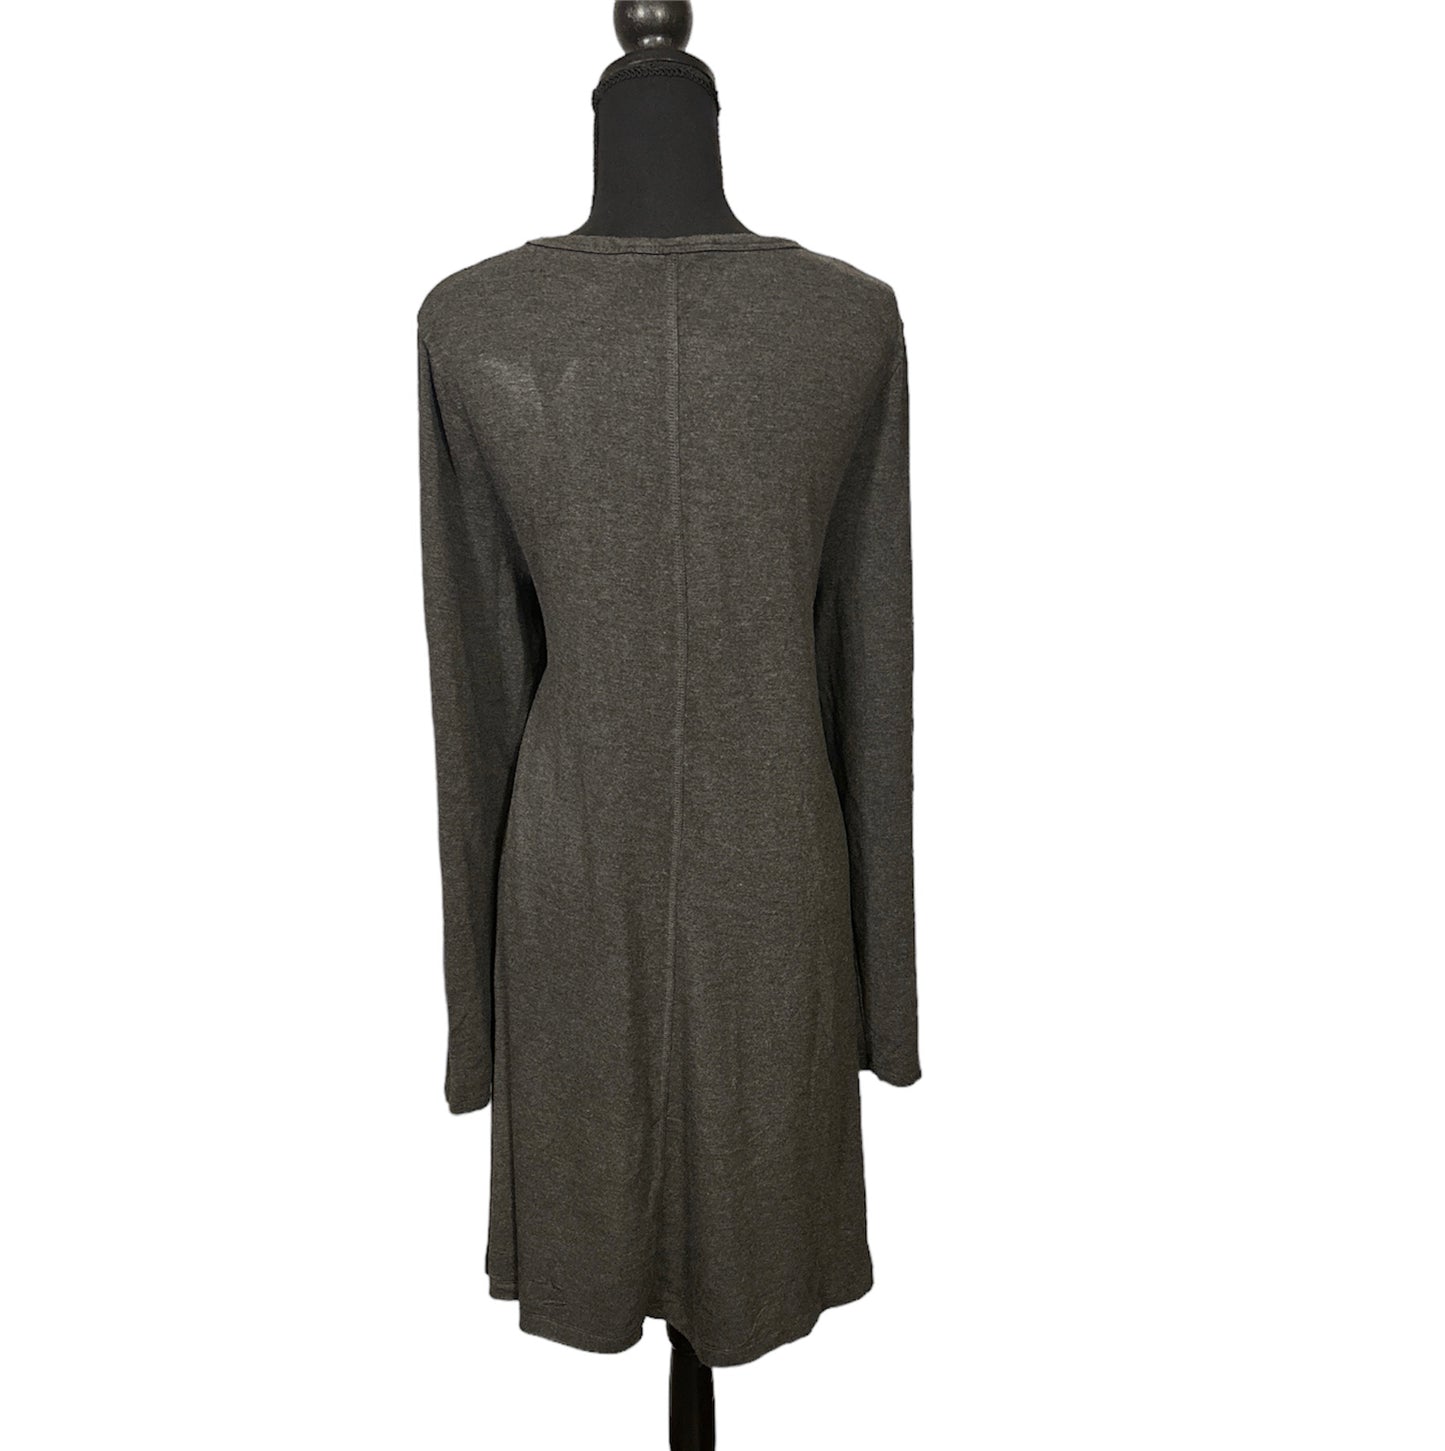 Workshop Republic Clothing - Gray Flare Dress